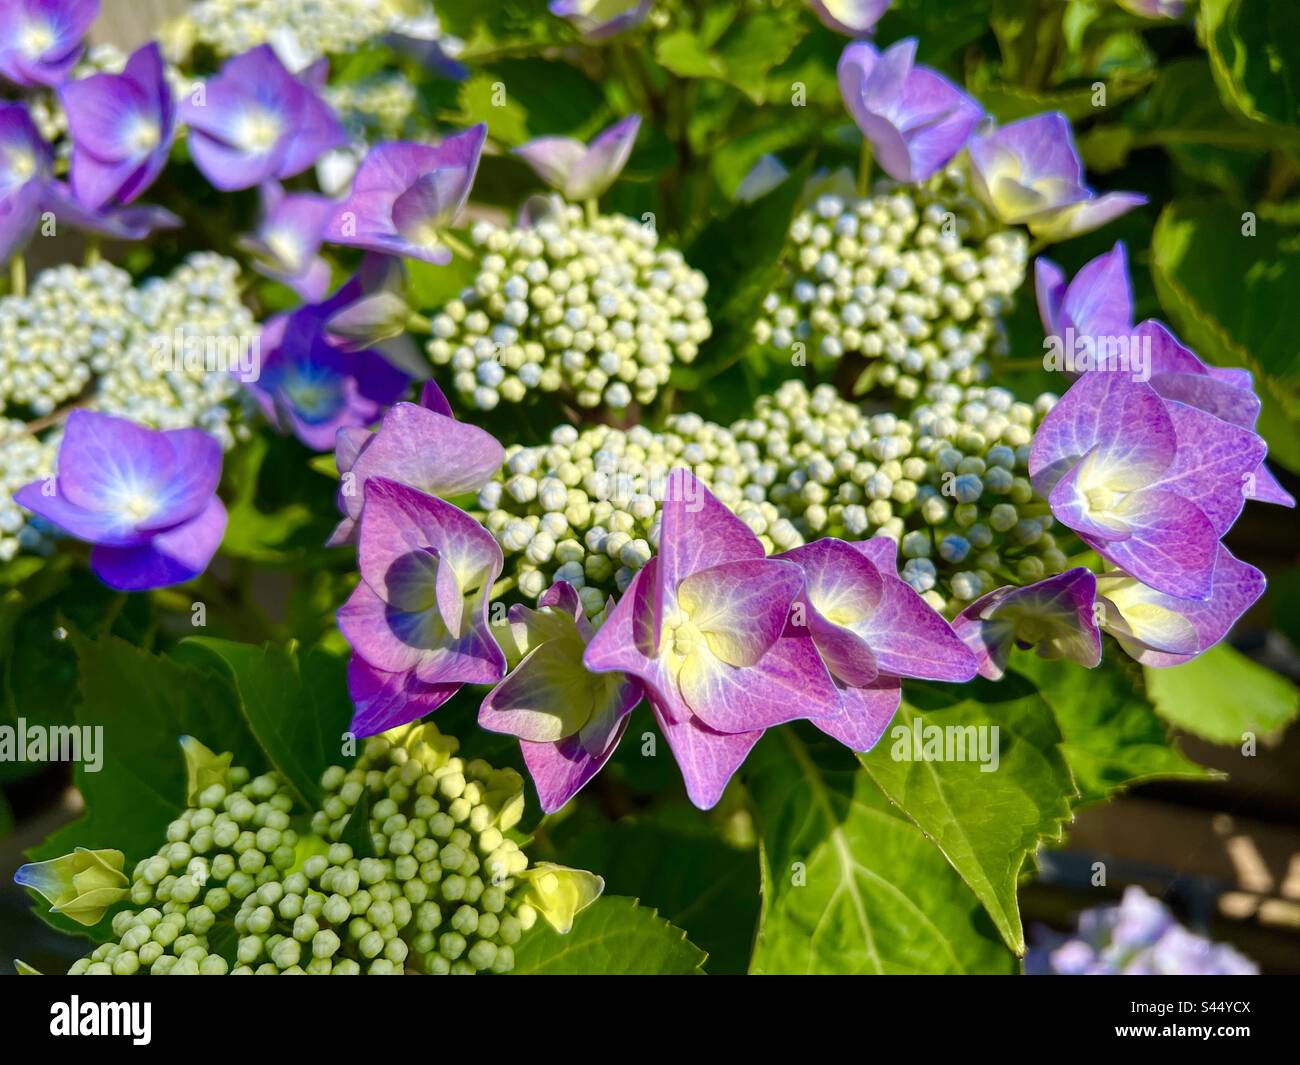 Hydrangea Lace Cap Blue, Lacecap, in flower Stock Photo